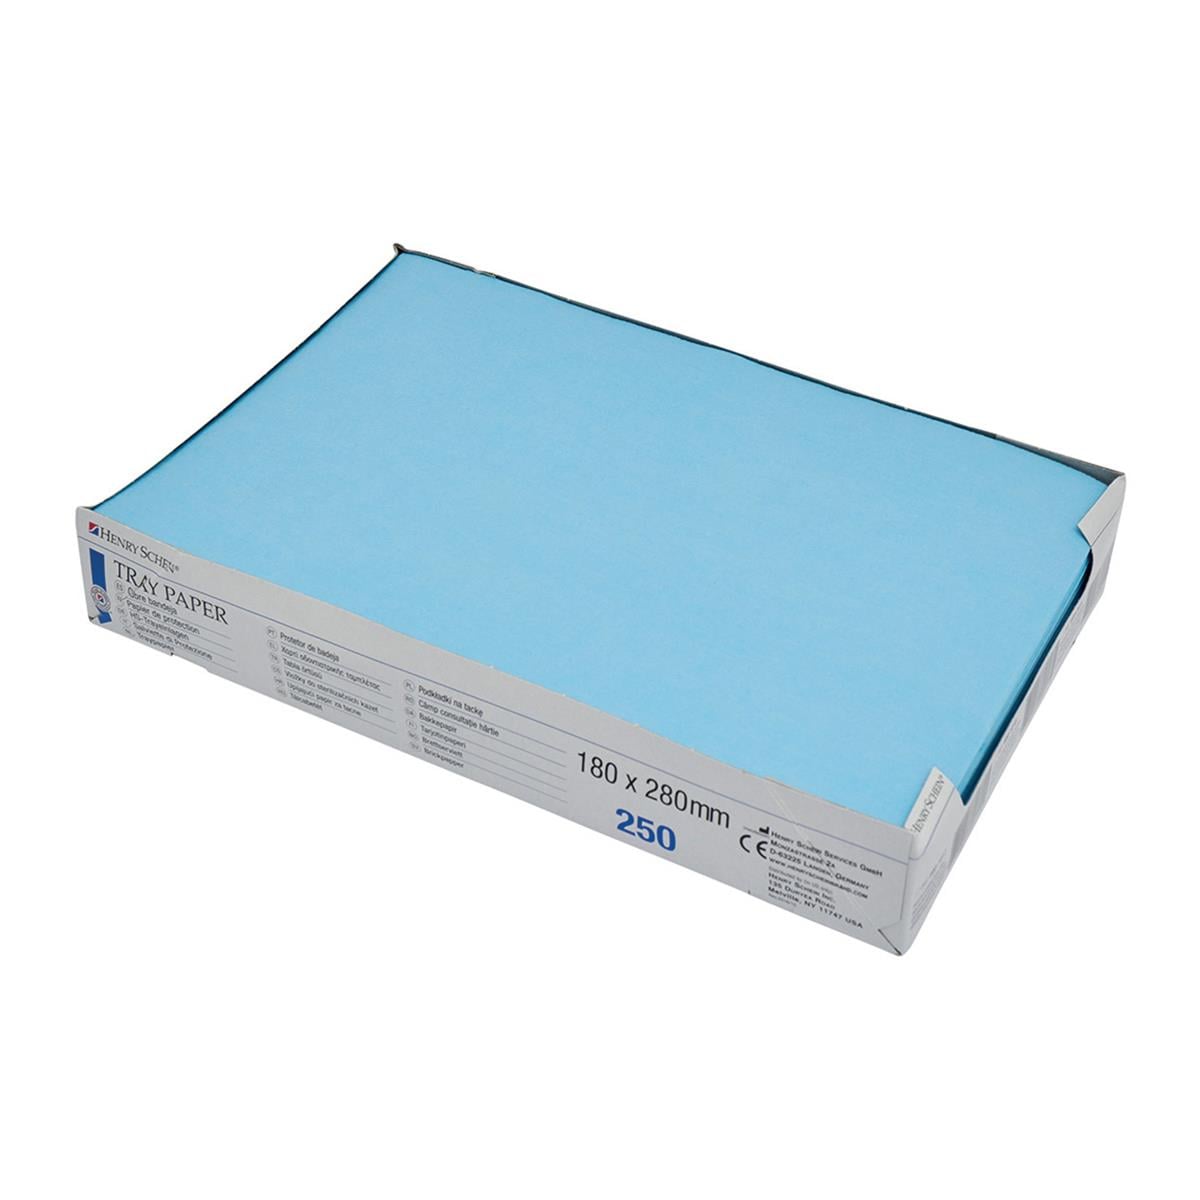 HS Tray Paper Blue 180 x 280mm 250pk